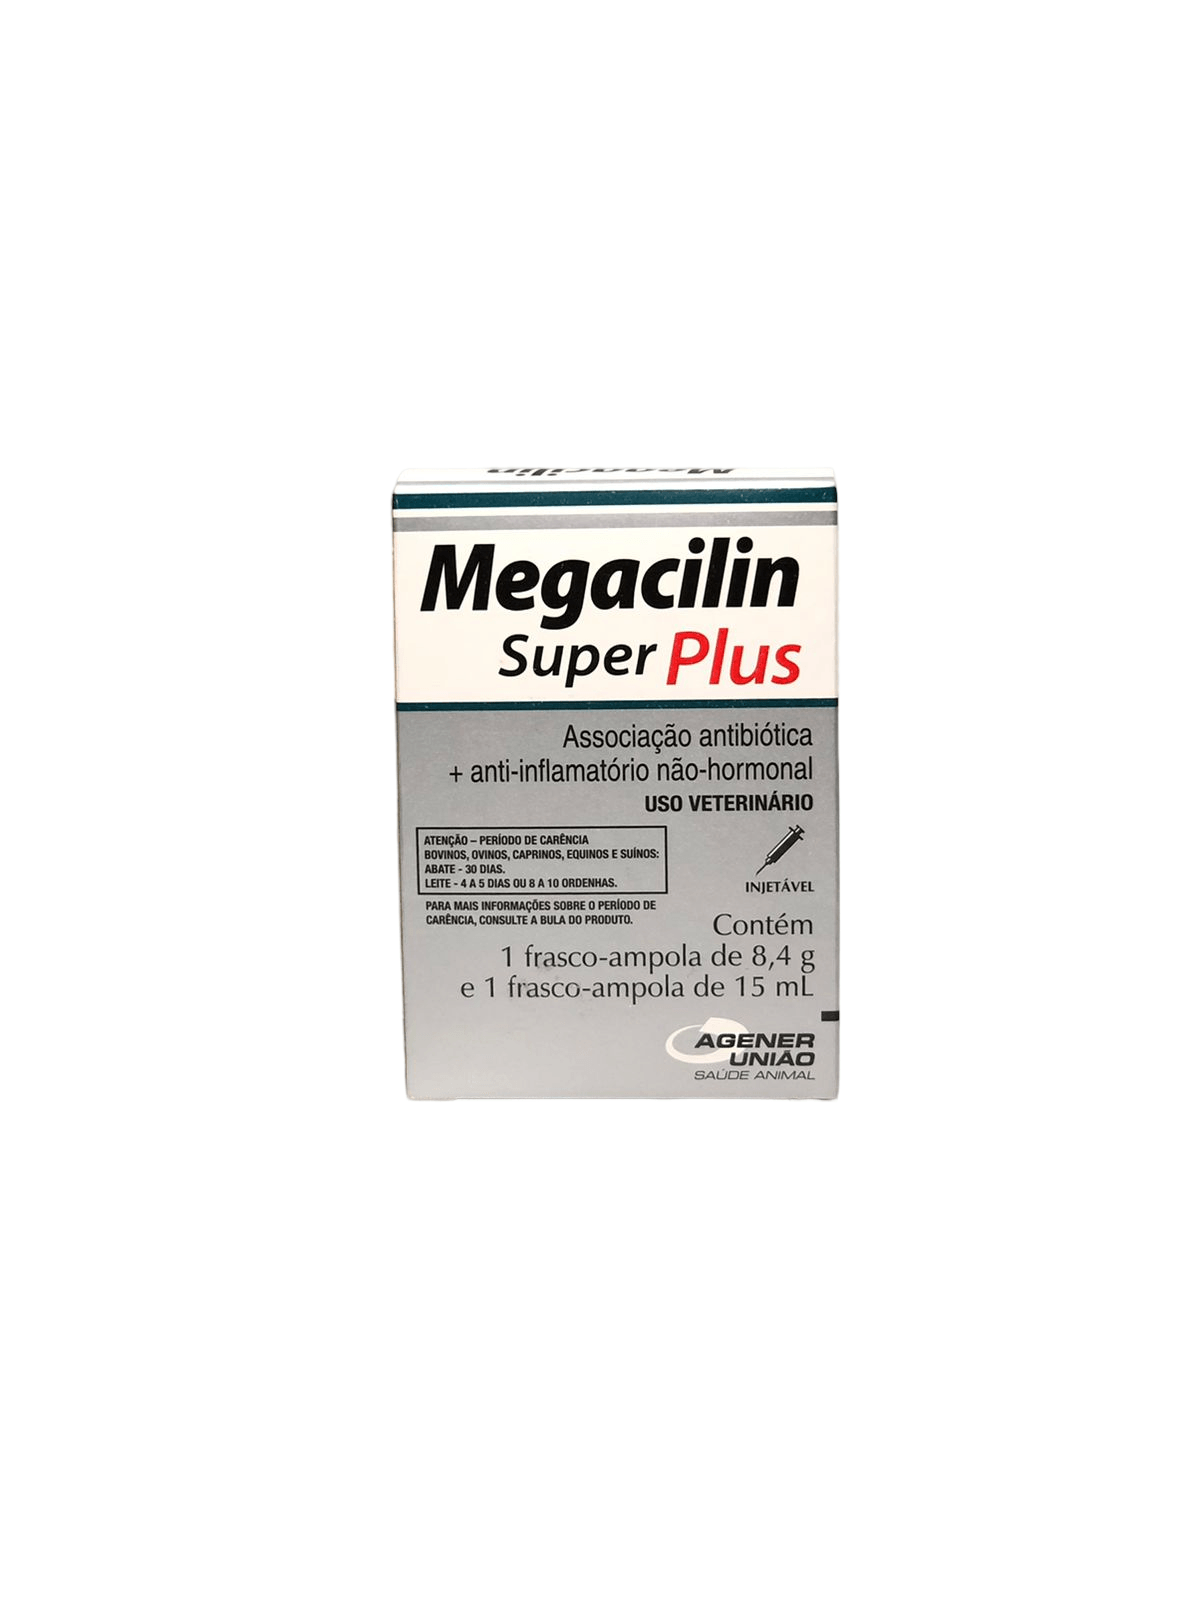 Megacilin Super Plus Diluente 15 Ml - Antimicrobiano e anti